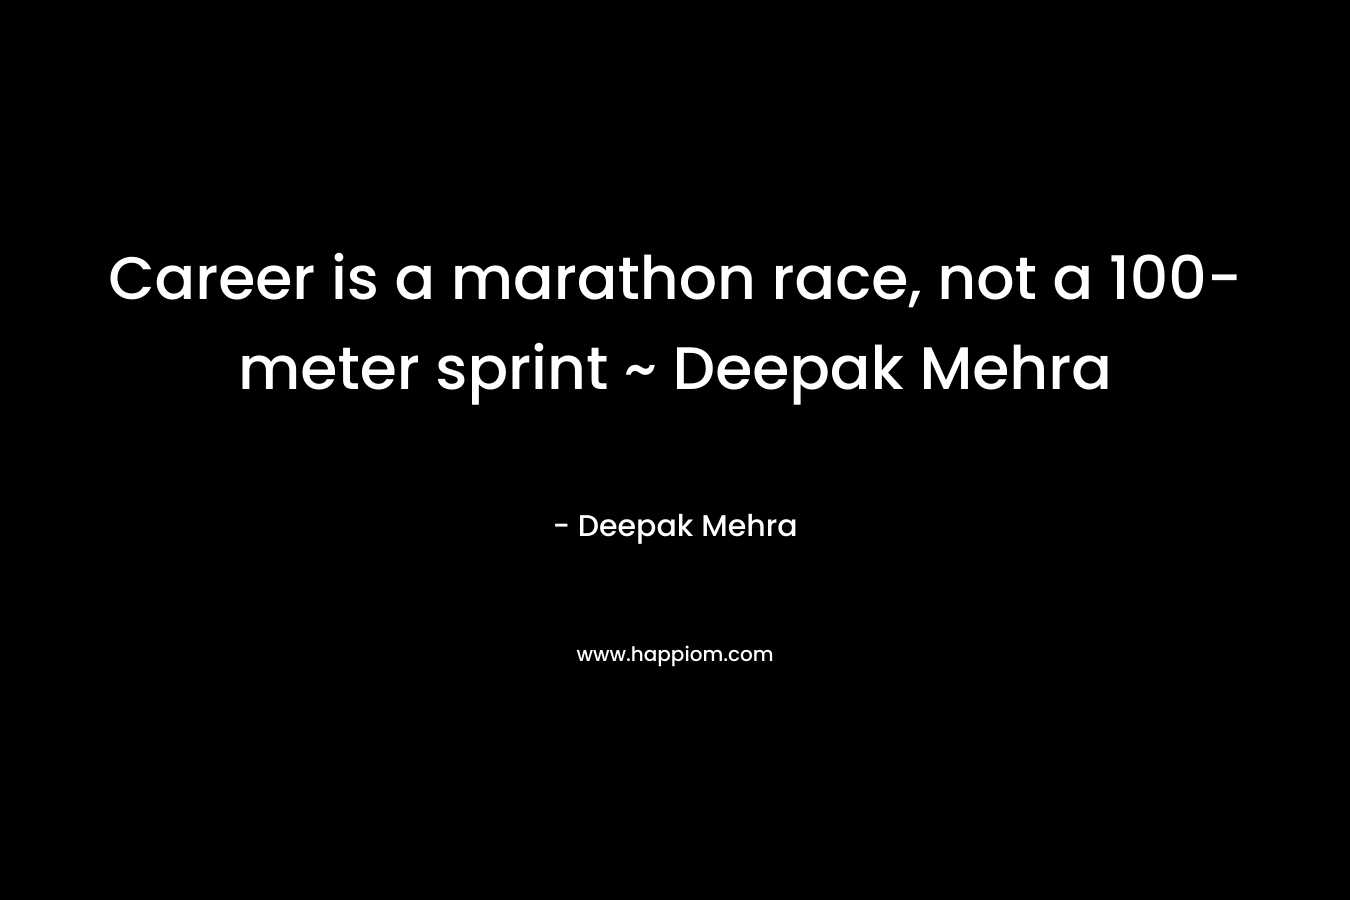 Career is a marathon race, not a 100-meter sprint ~ Deepak Mehra